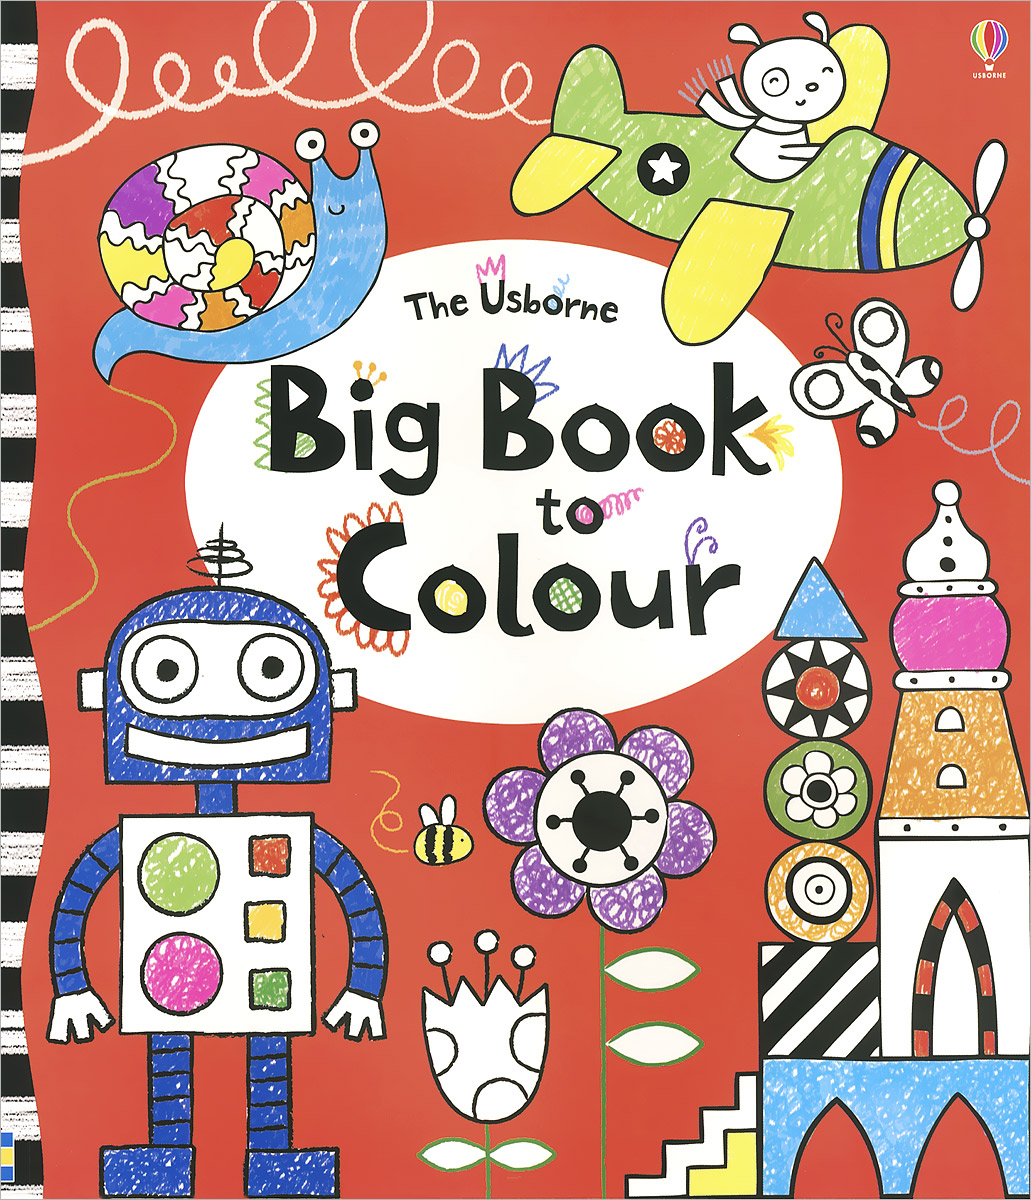 The Usborne Big Book to Colour